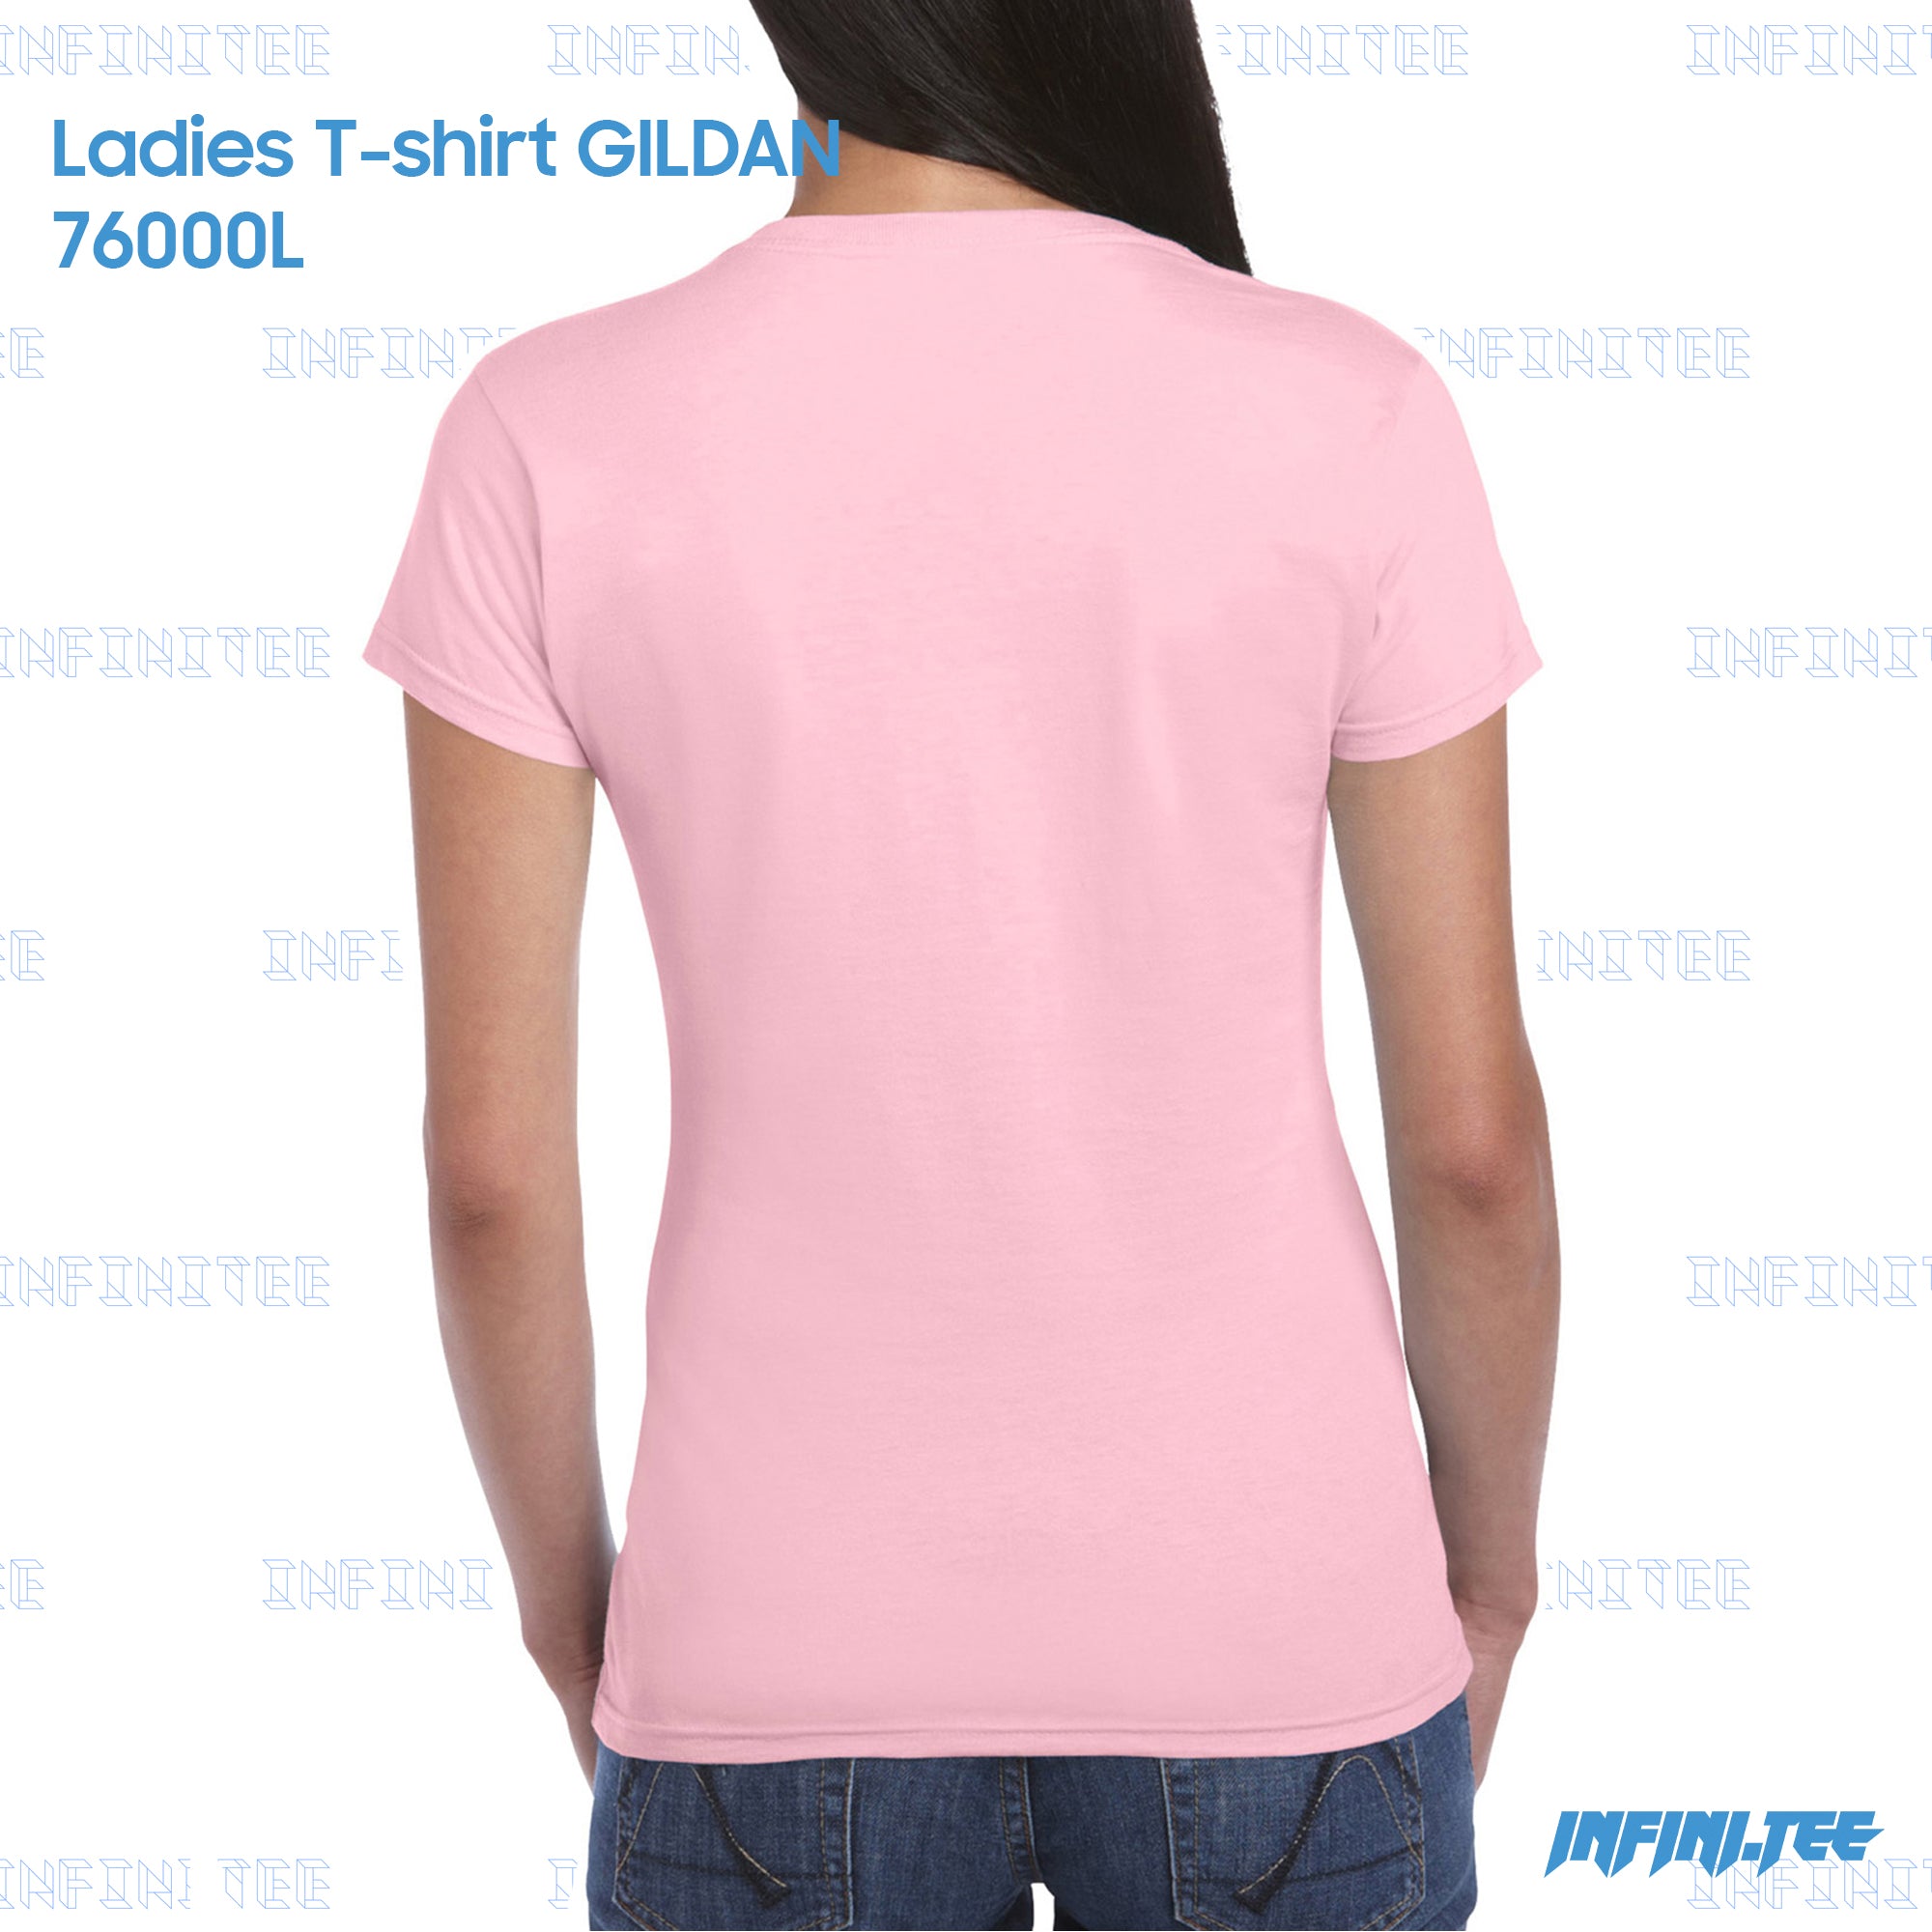 Ladies T-shirt 76000L GILDAN - LIGHT PINK